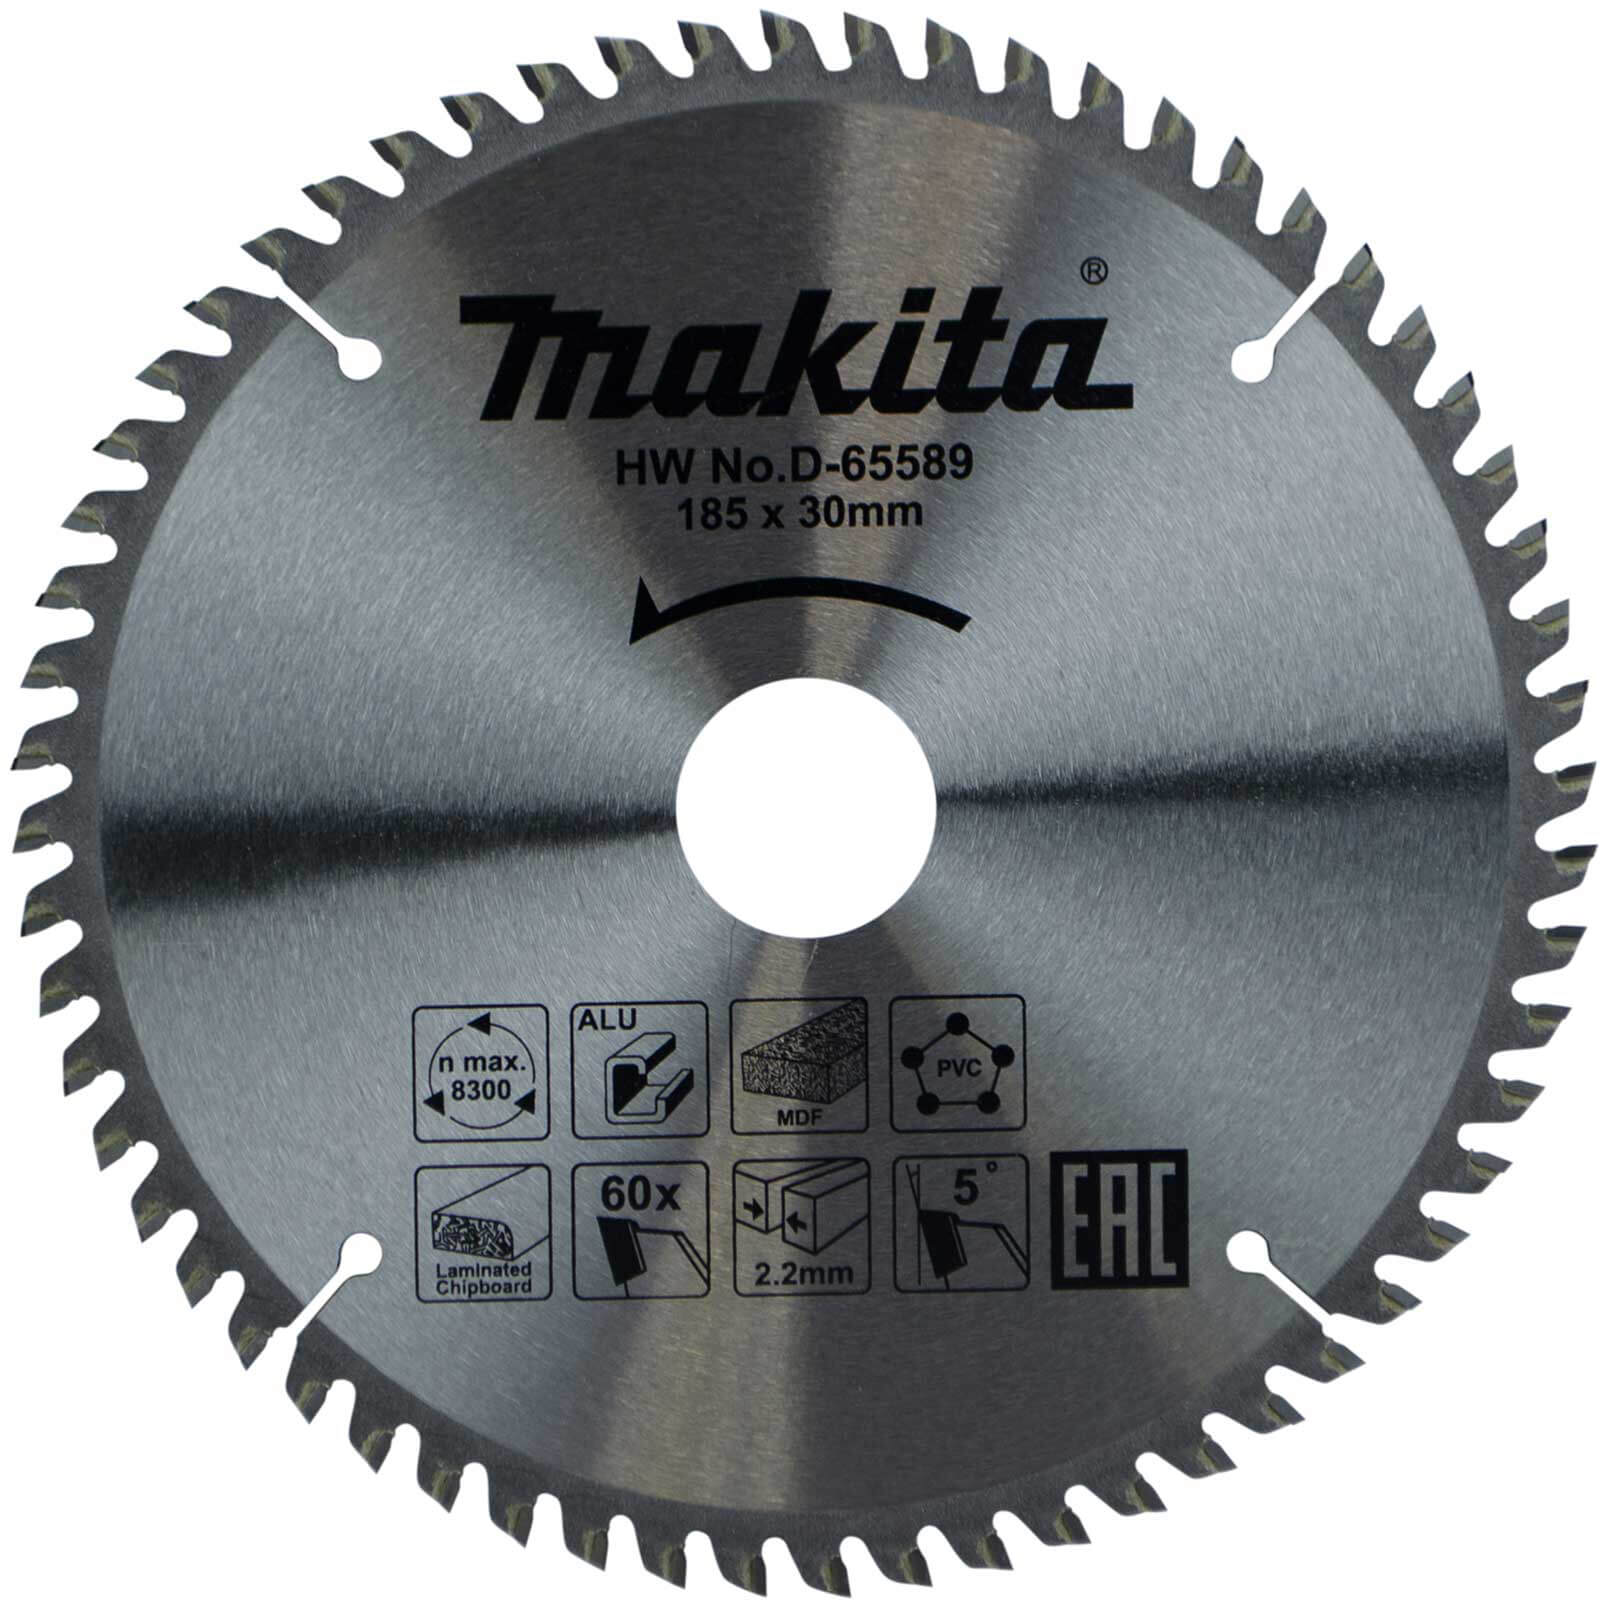 Photos - Power Tool Accessory Makita Multi Purpose Circular Saw Blade 185mm 60T 30mm D-65589 